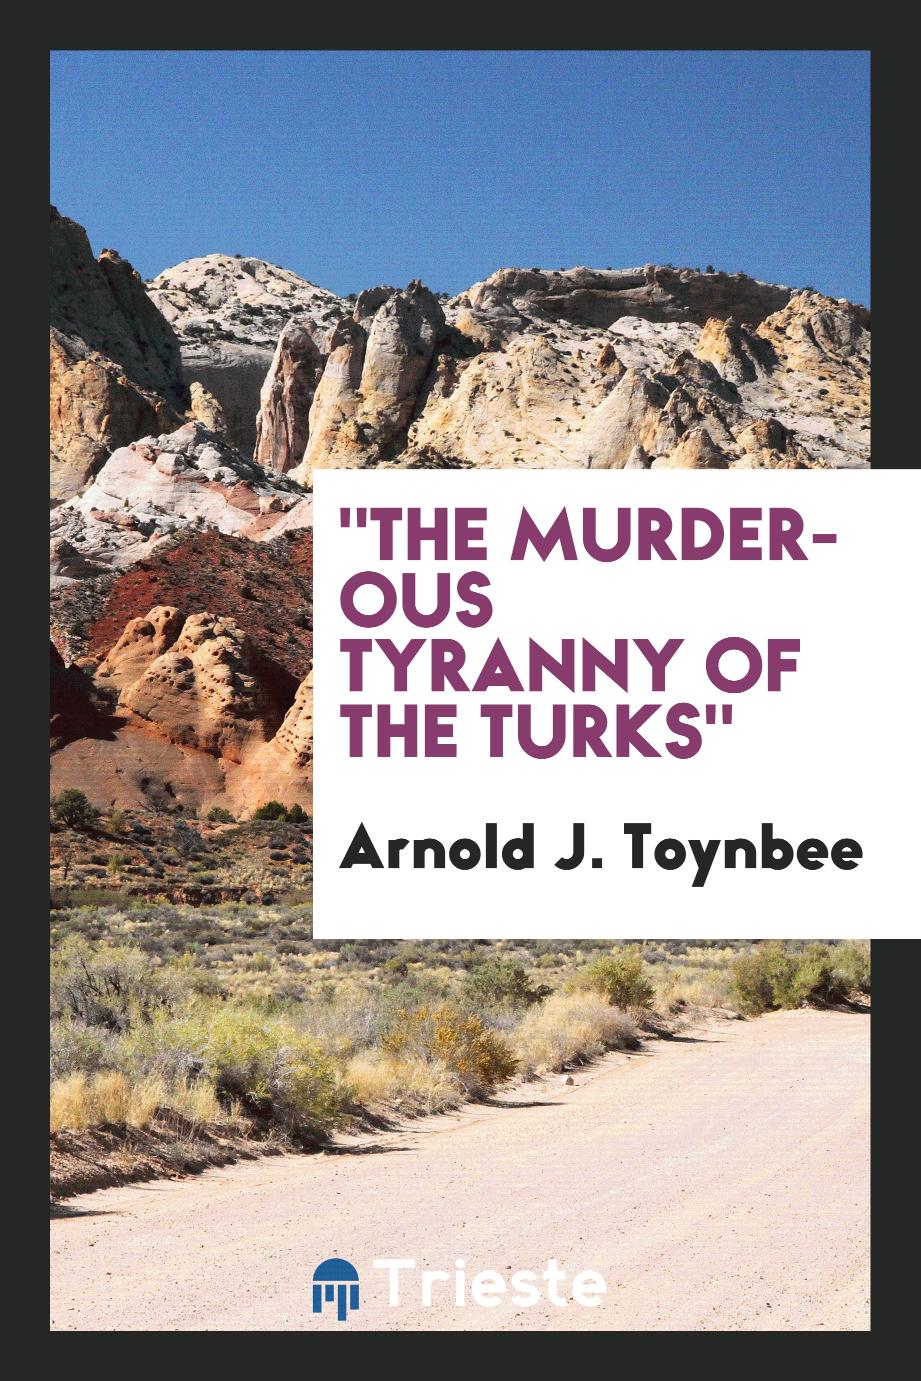 Arnold J. Toynbee - "The murderous tyranny of the Turks"